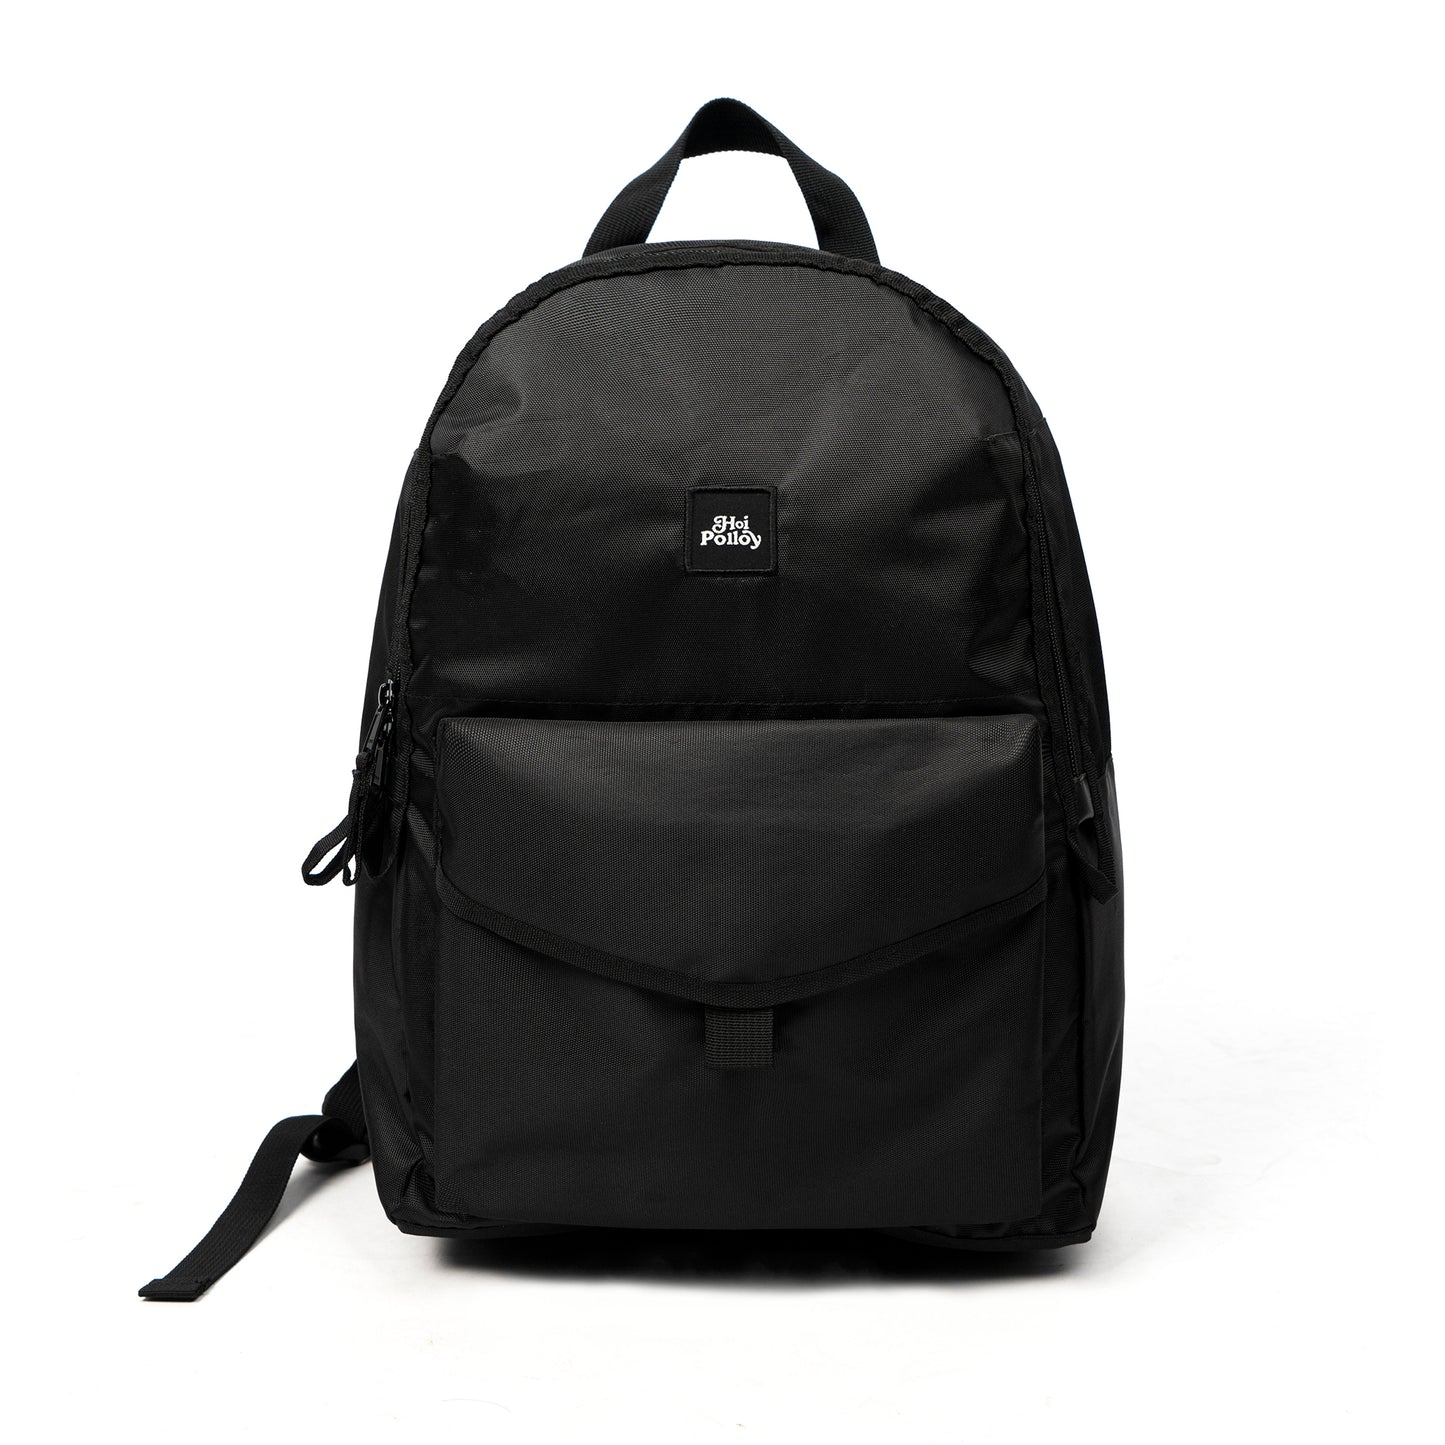 Claslite Backpack